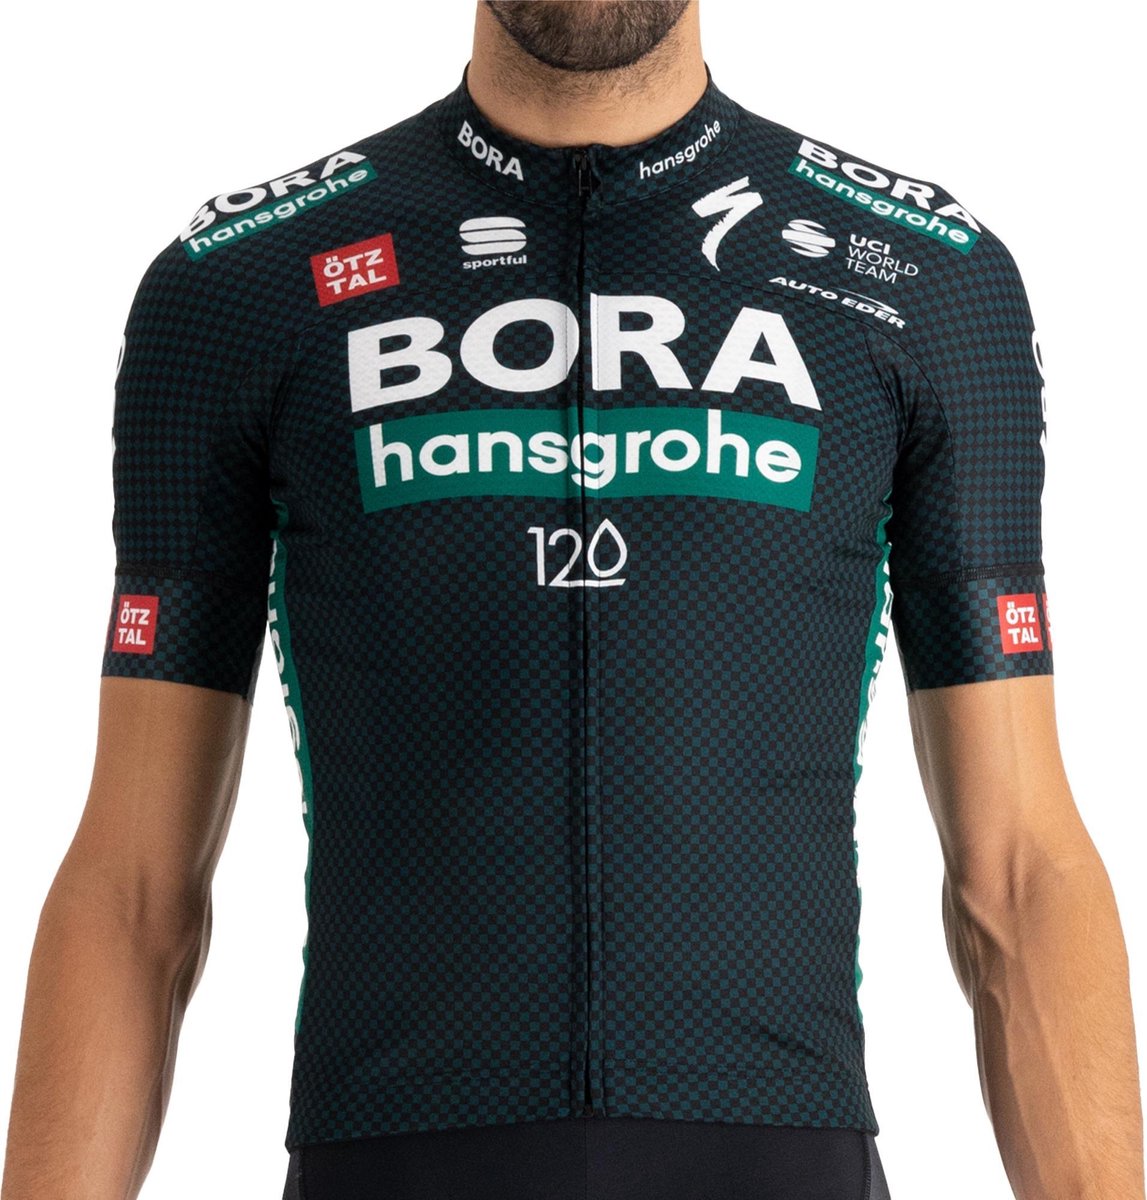 Rijden Arrangement erotisch Sportful Bora Hansgrohe Tour de France 2021 wielershirt korte mouwen Heren  Zwart Groen-L | bol.com